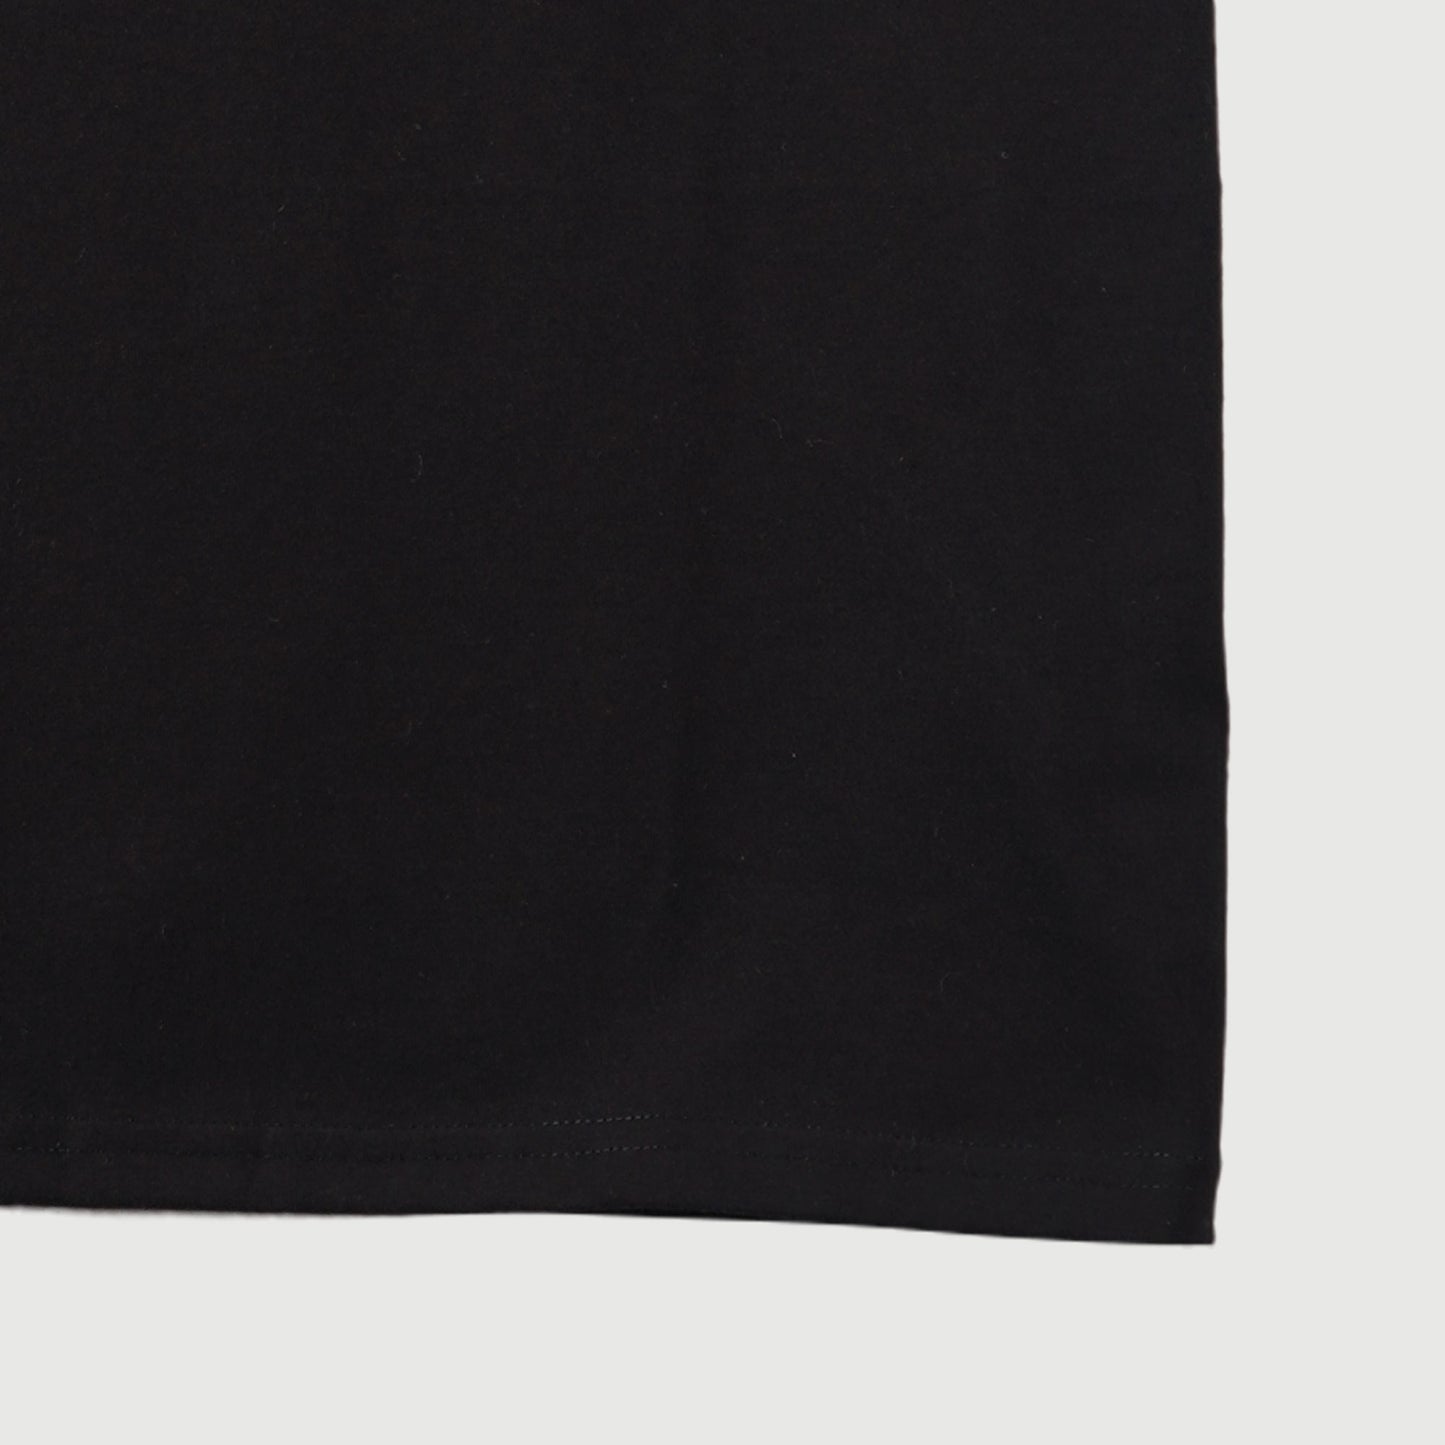 Petrol Basic Tees for Men Slim Fitting Shirt CVC Jersey Fabric Trendy fashion Casual Top T-shirt for Men 146950-U (Black)